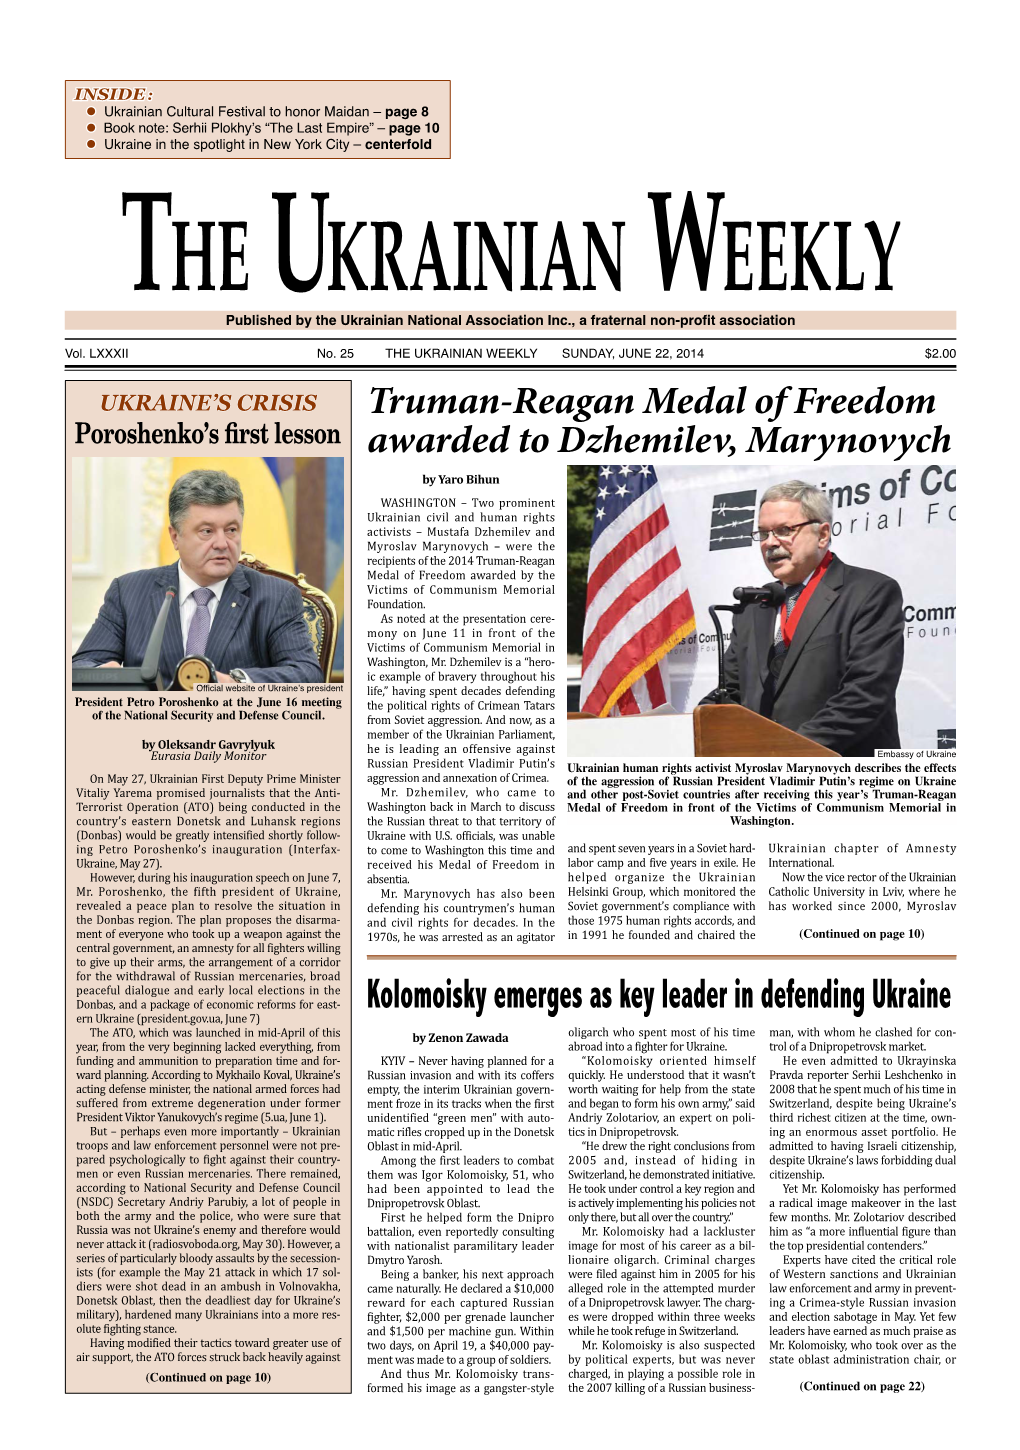 The Ukrainian Weekly 2014, No.25